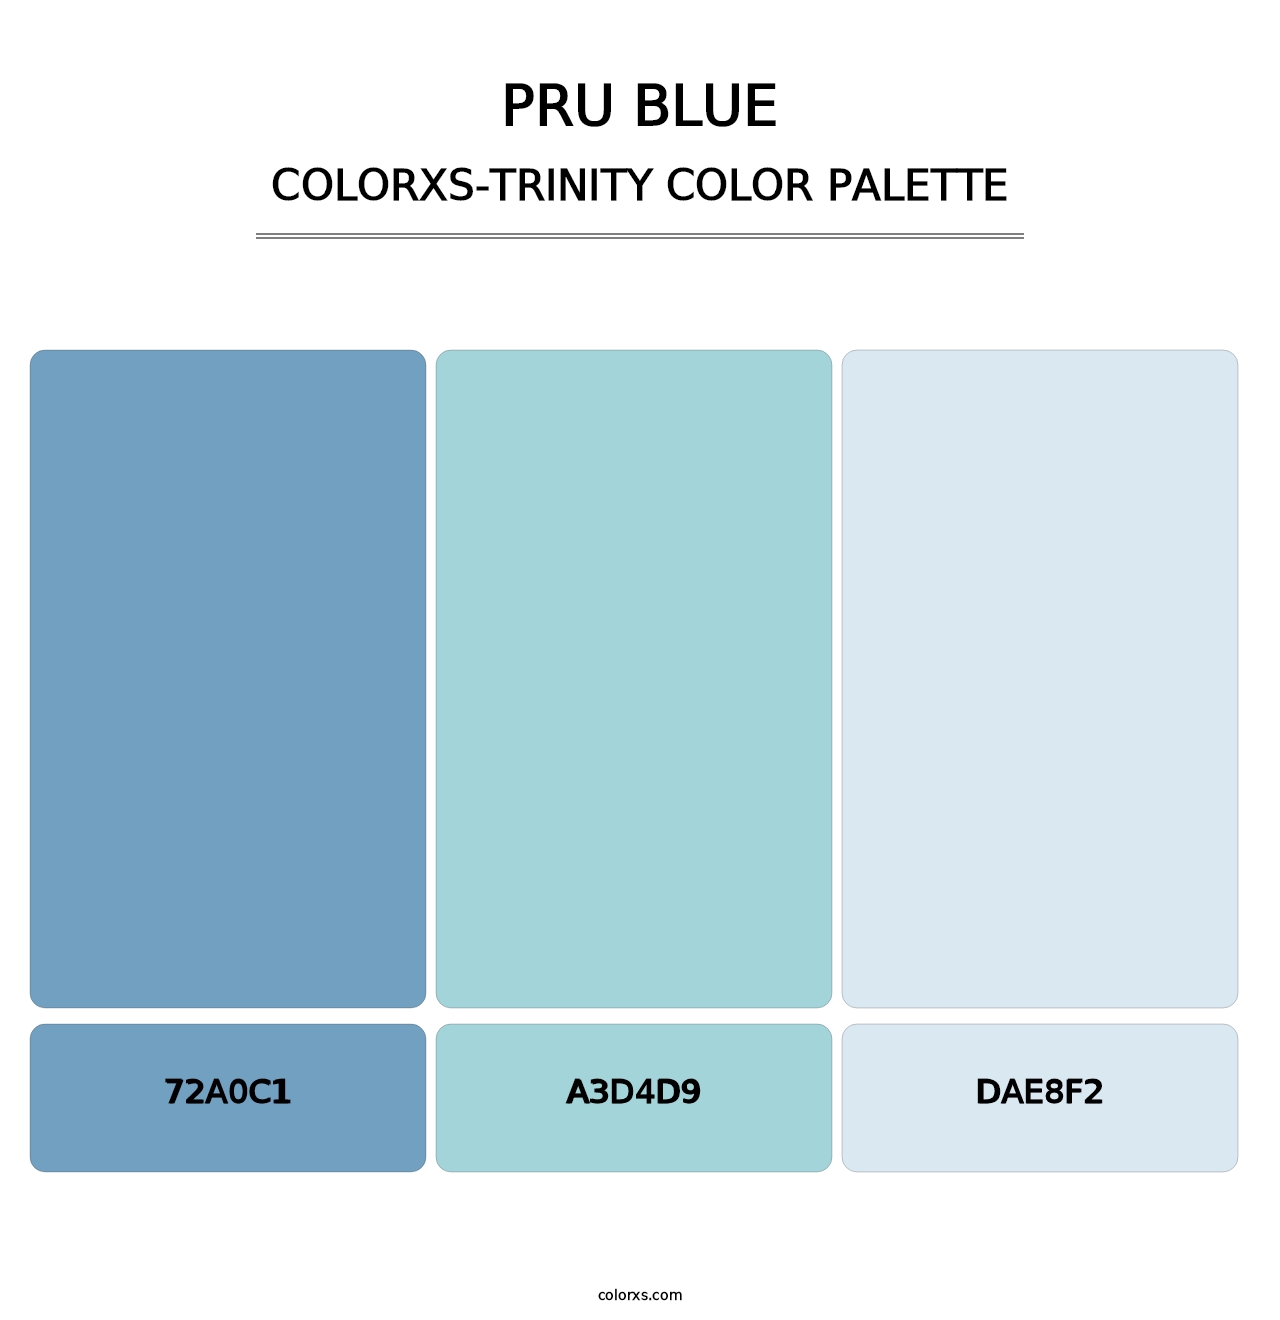 PRU Blue - Colorxs Trinity Palette